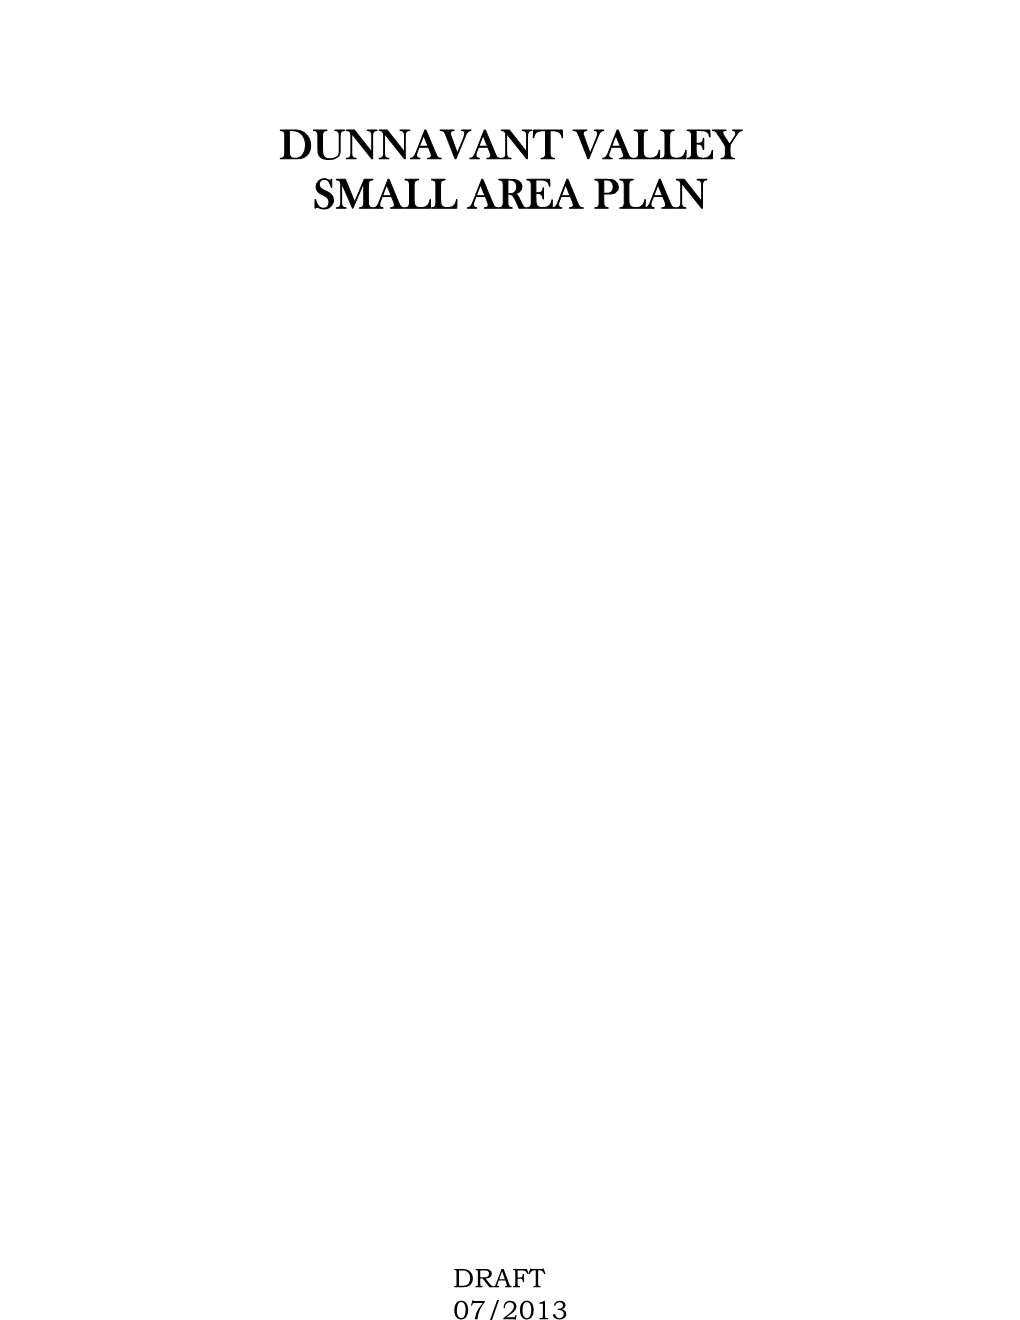 Dunnavant Valley Small Area Plan